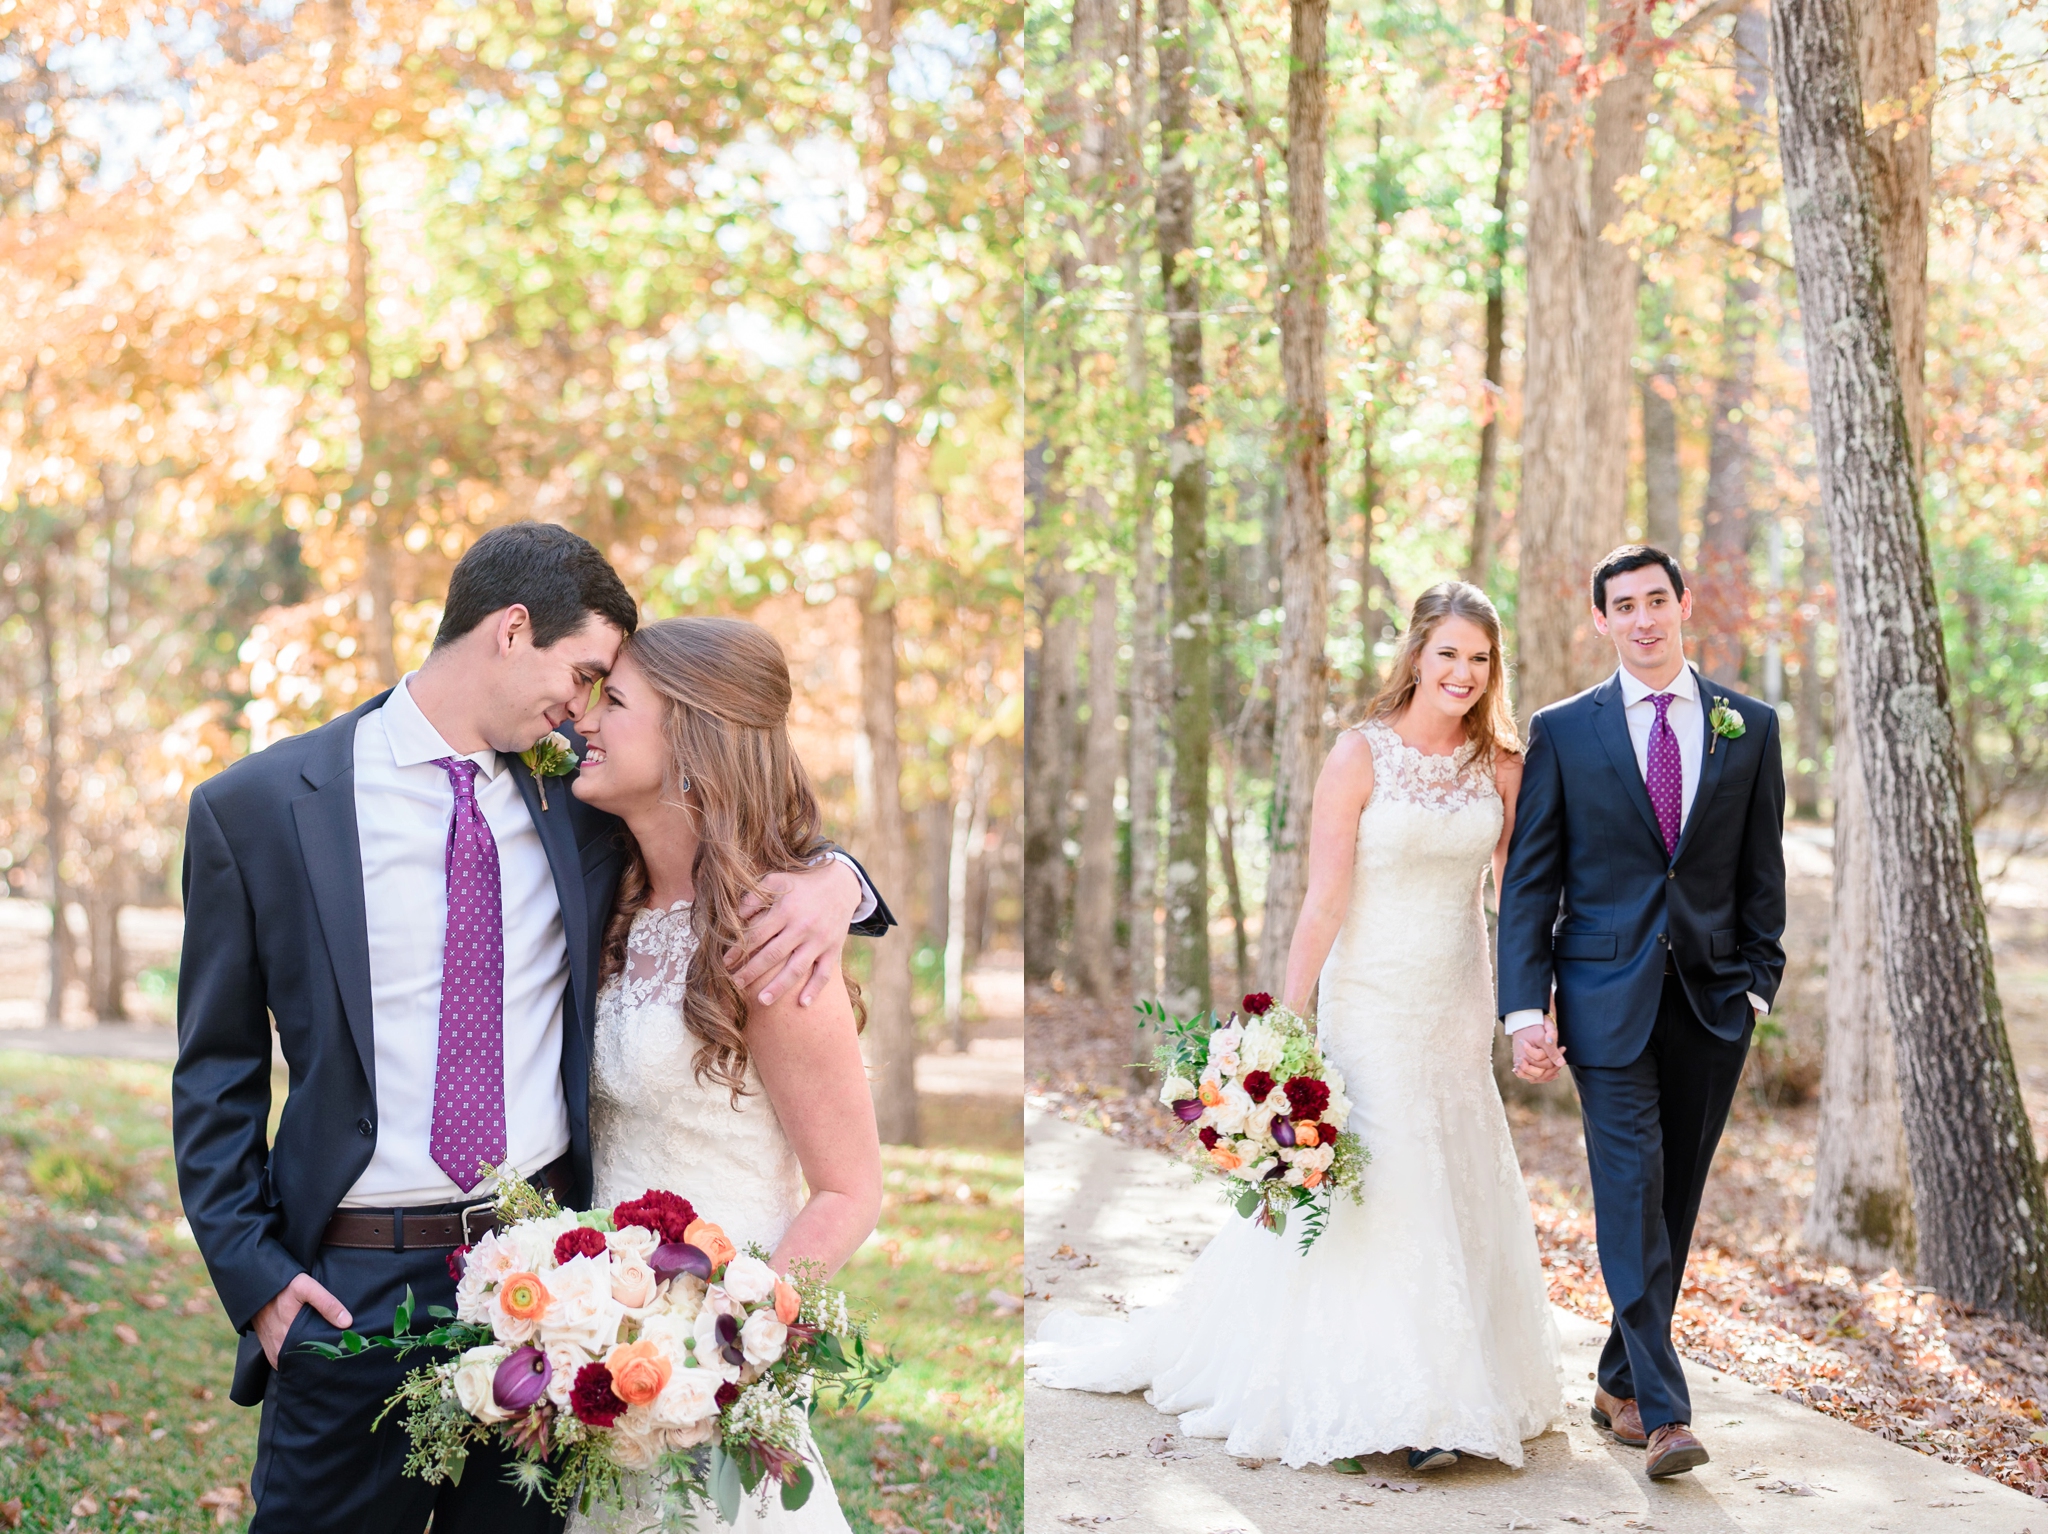 Montgomery Antebellum Home Wedding Day | Birmingham Alabama Wedding Photographer_0012.jpg